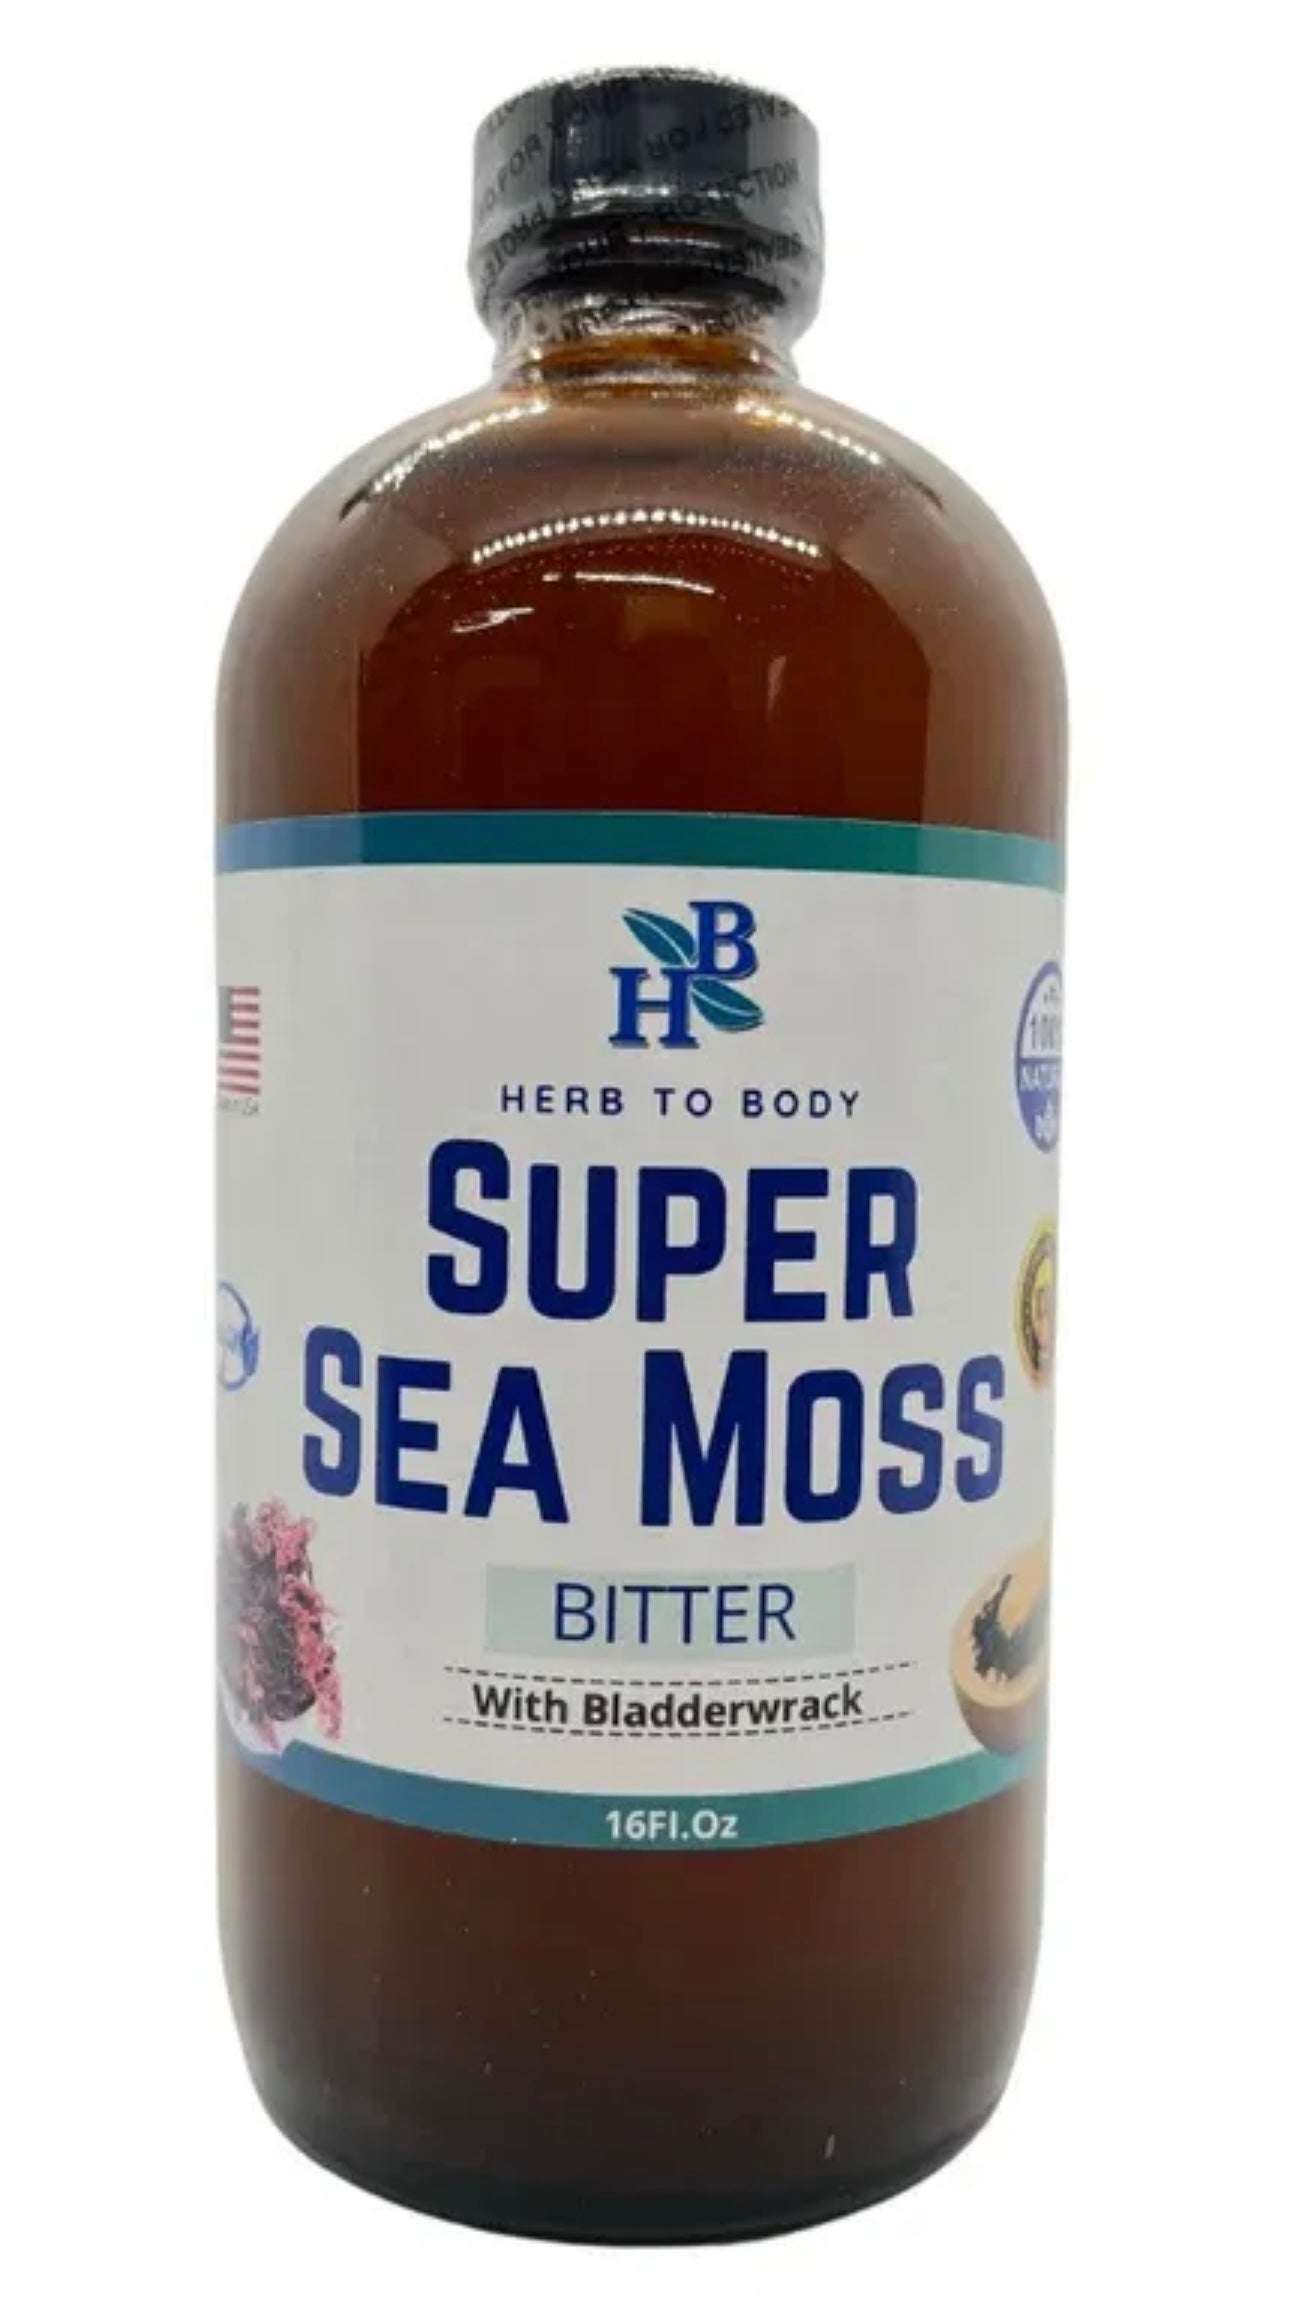 Sea Moss Bitters